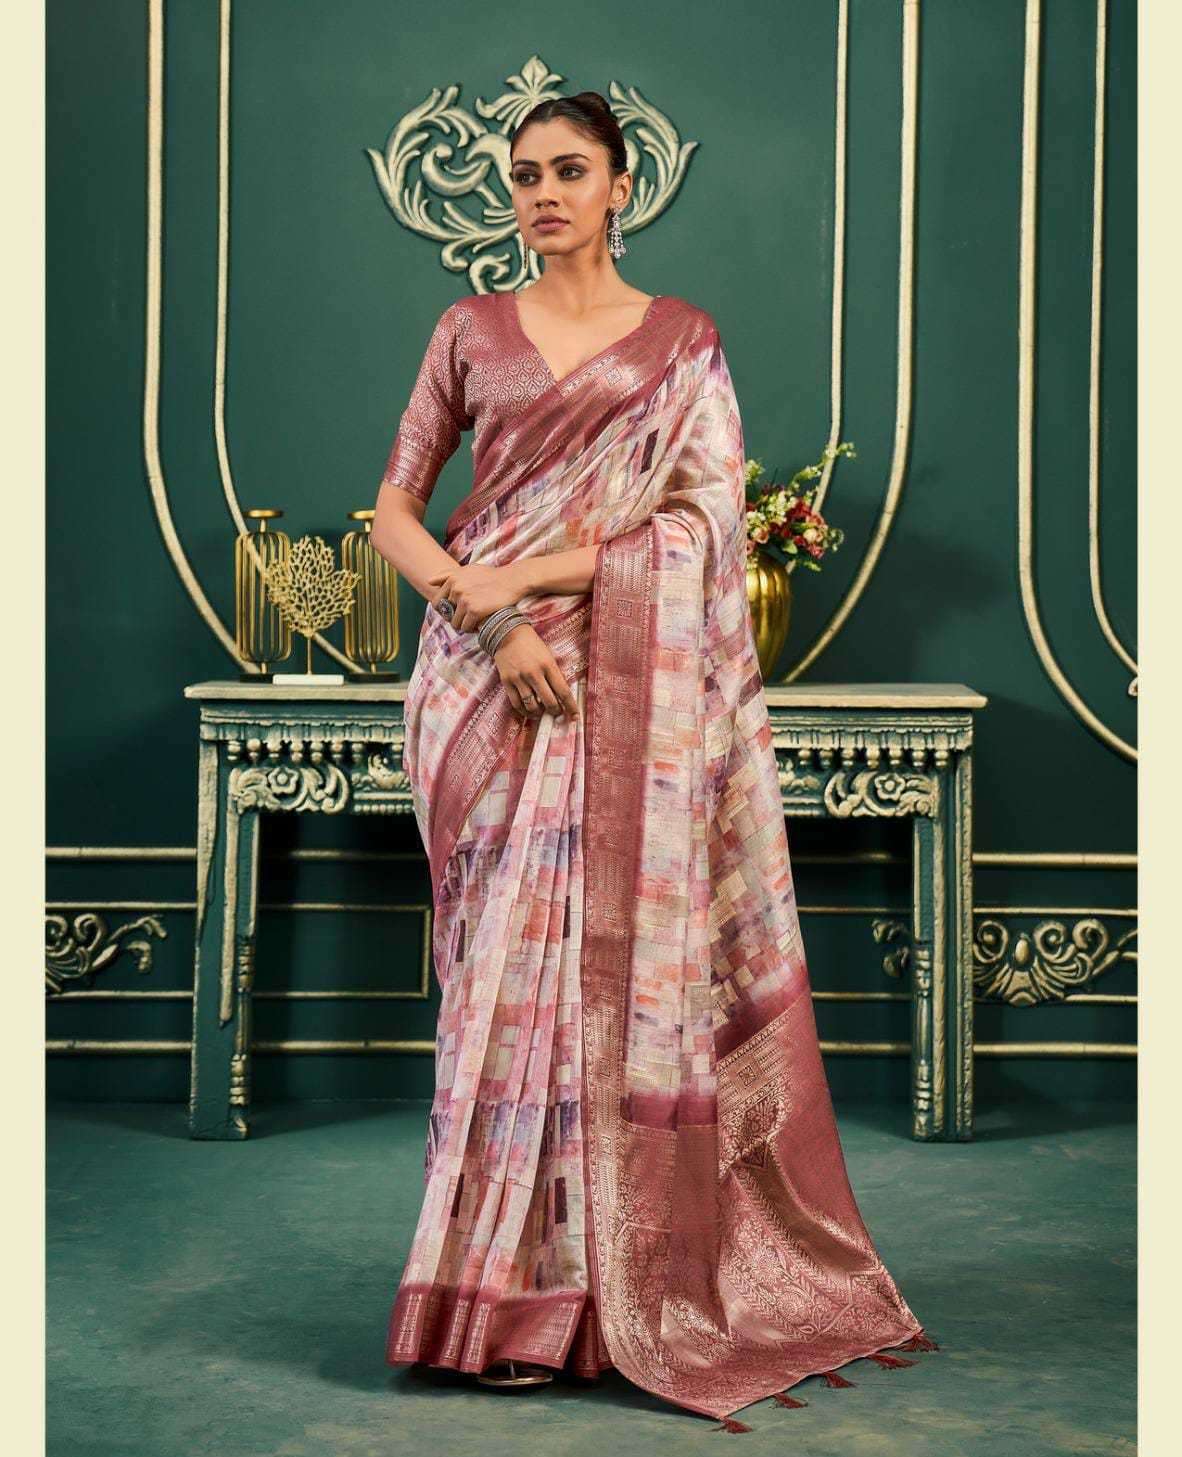 Rajpath pranalika silk series 183001-183006 Modal Cotton With Digital Print saree